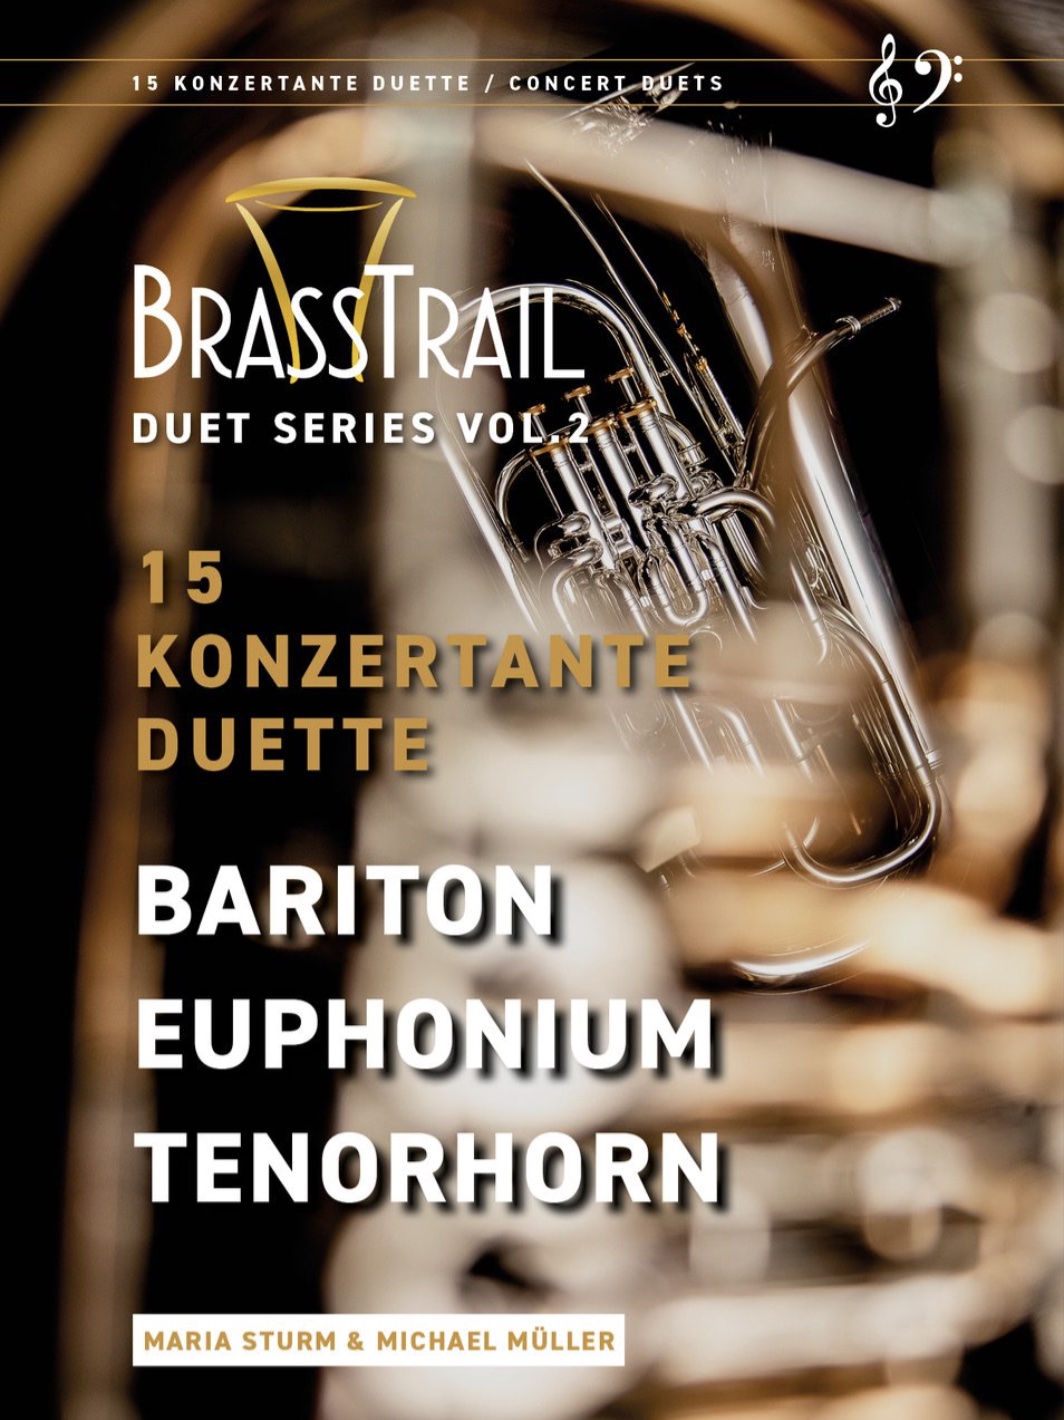 BrassTrail Duets series Vol.2 - 15 Concert Duets - Maria Sturm and Michael Muller - BASS CLEF